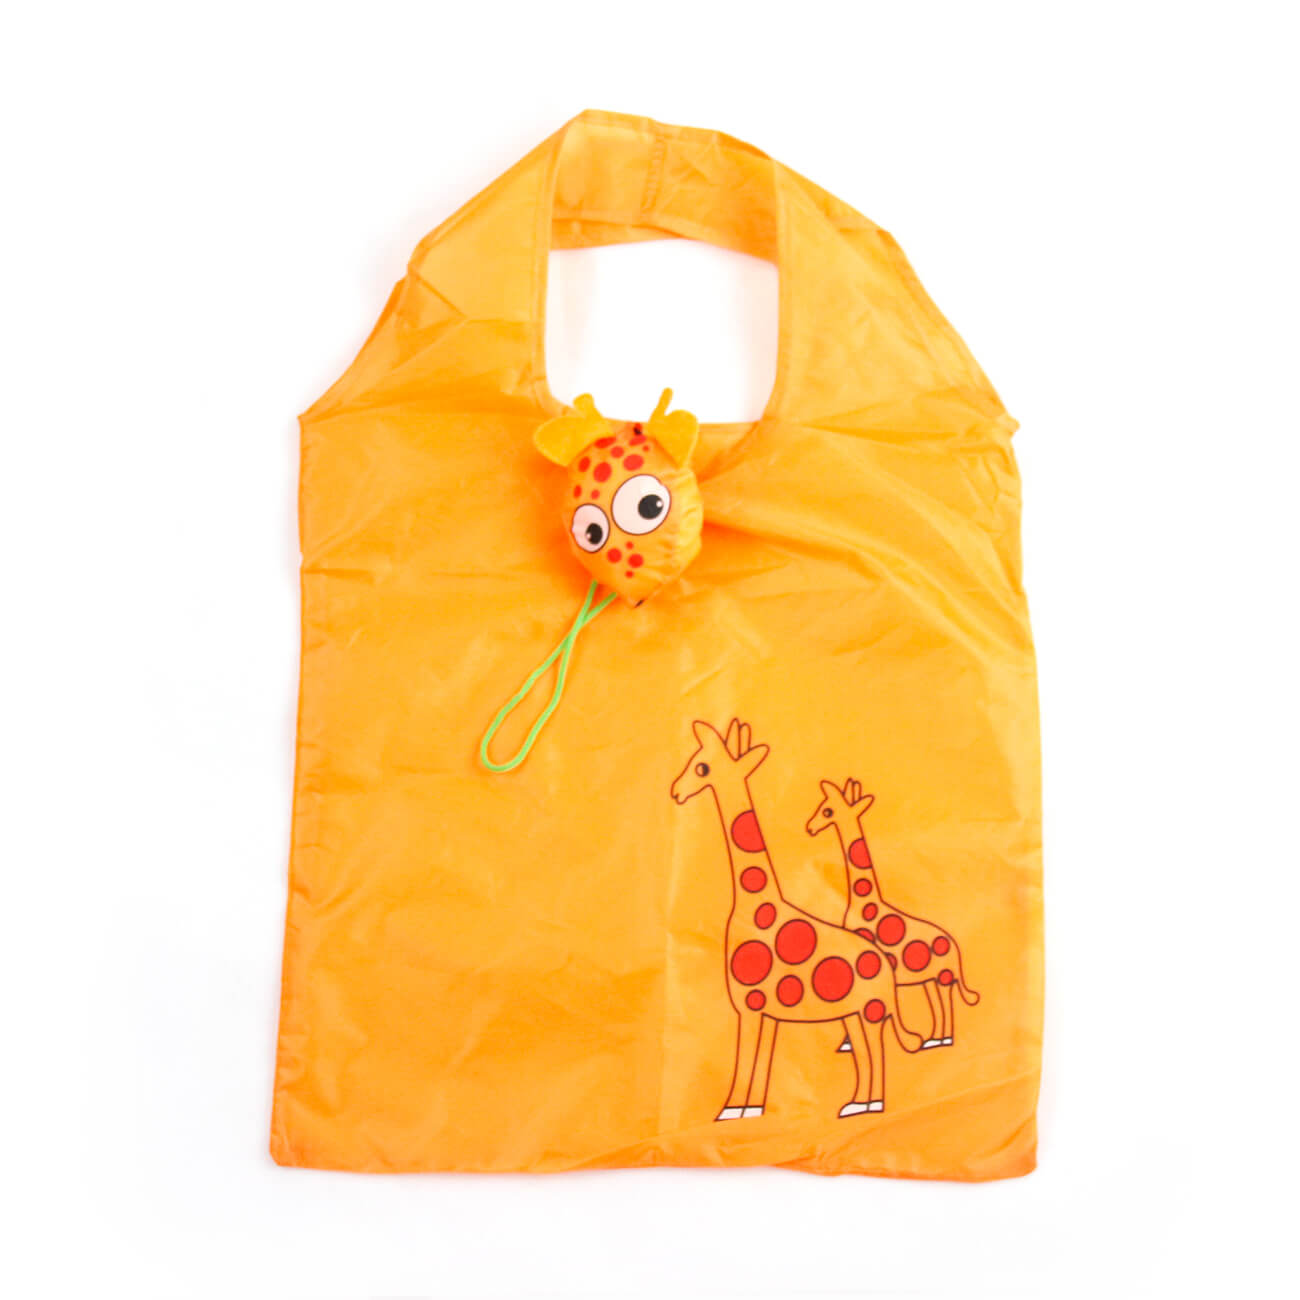 Foldable Animal Giraffe Shopping Bag